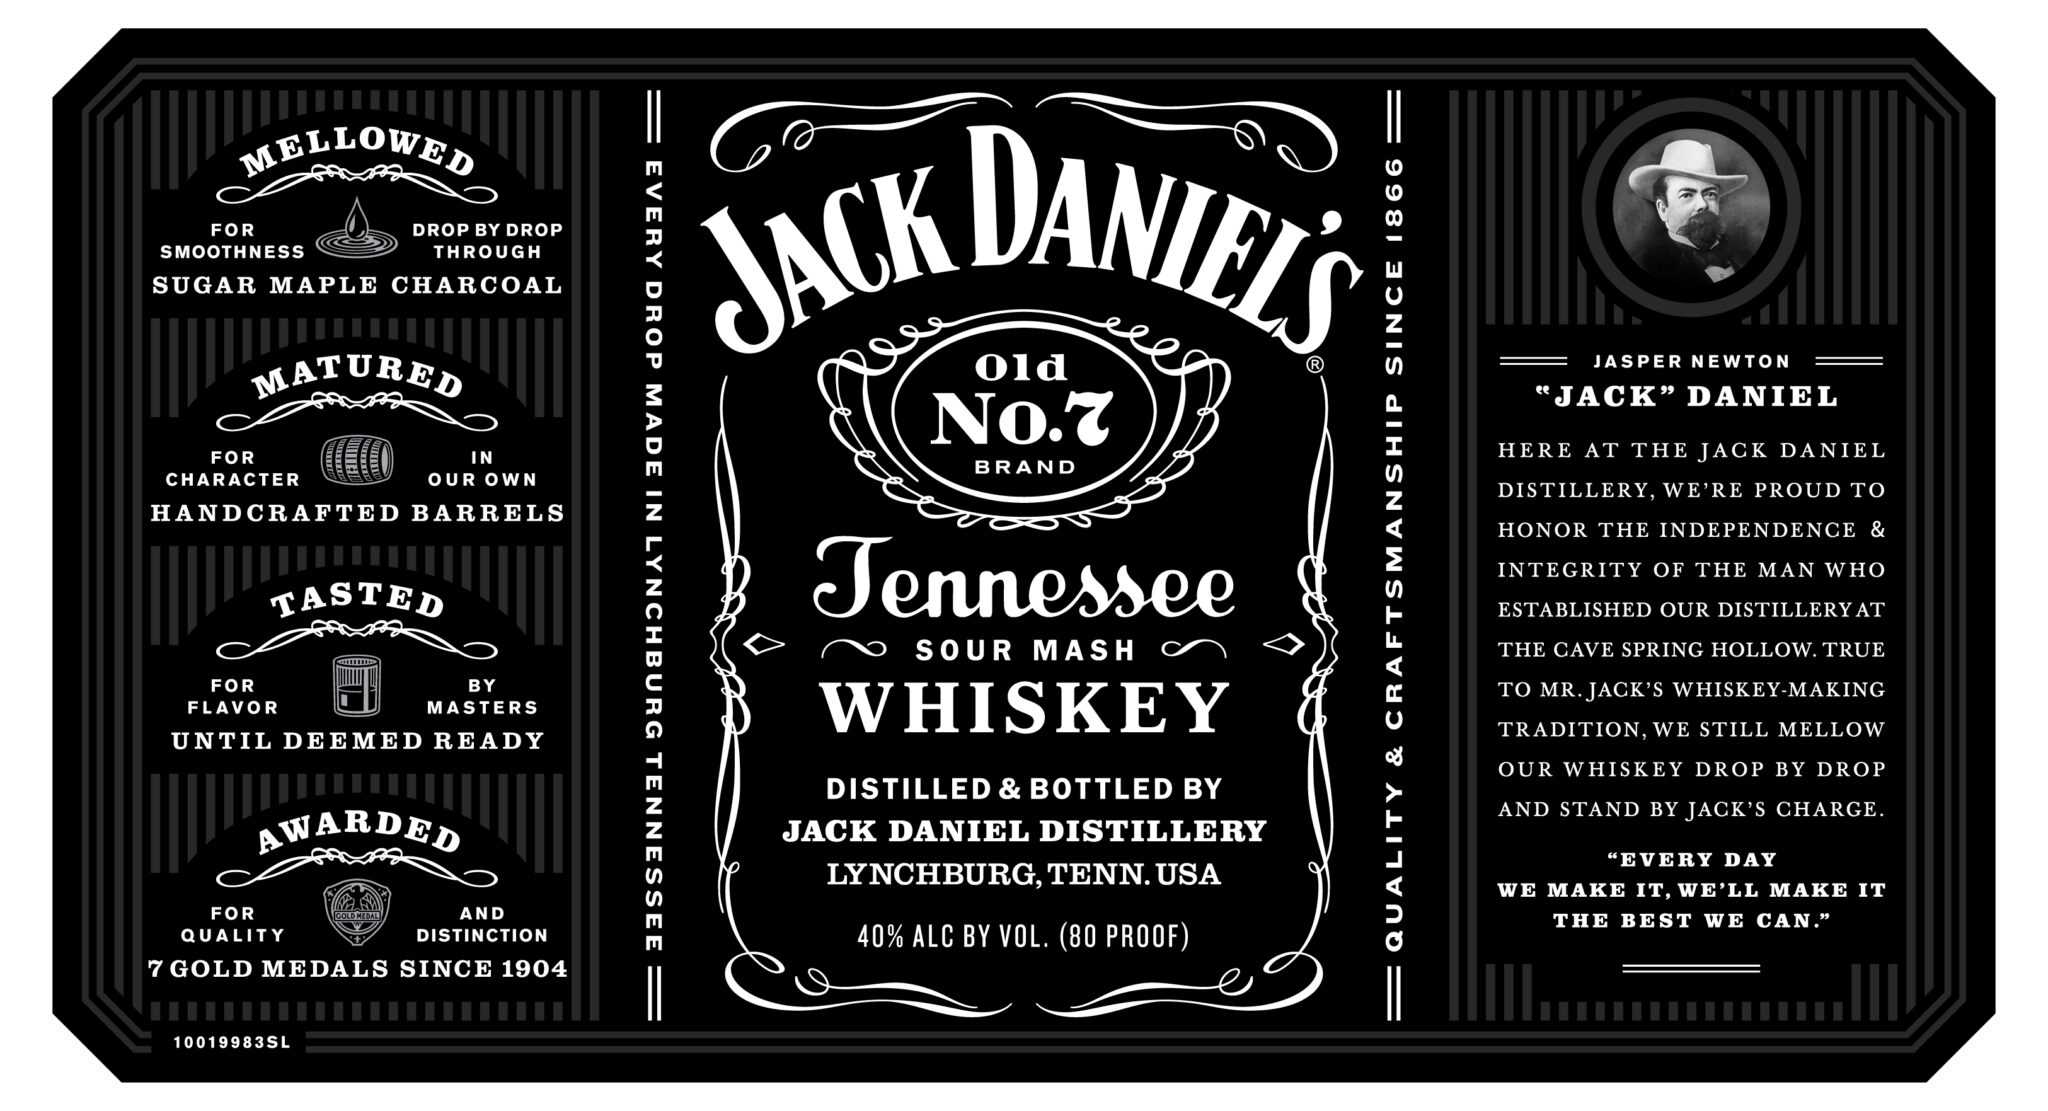 Printable Jack Daniels Label